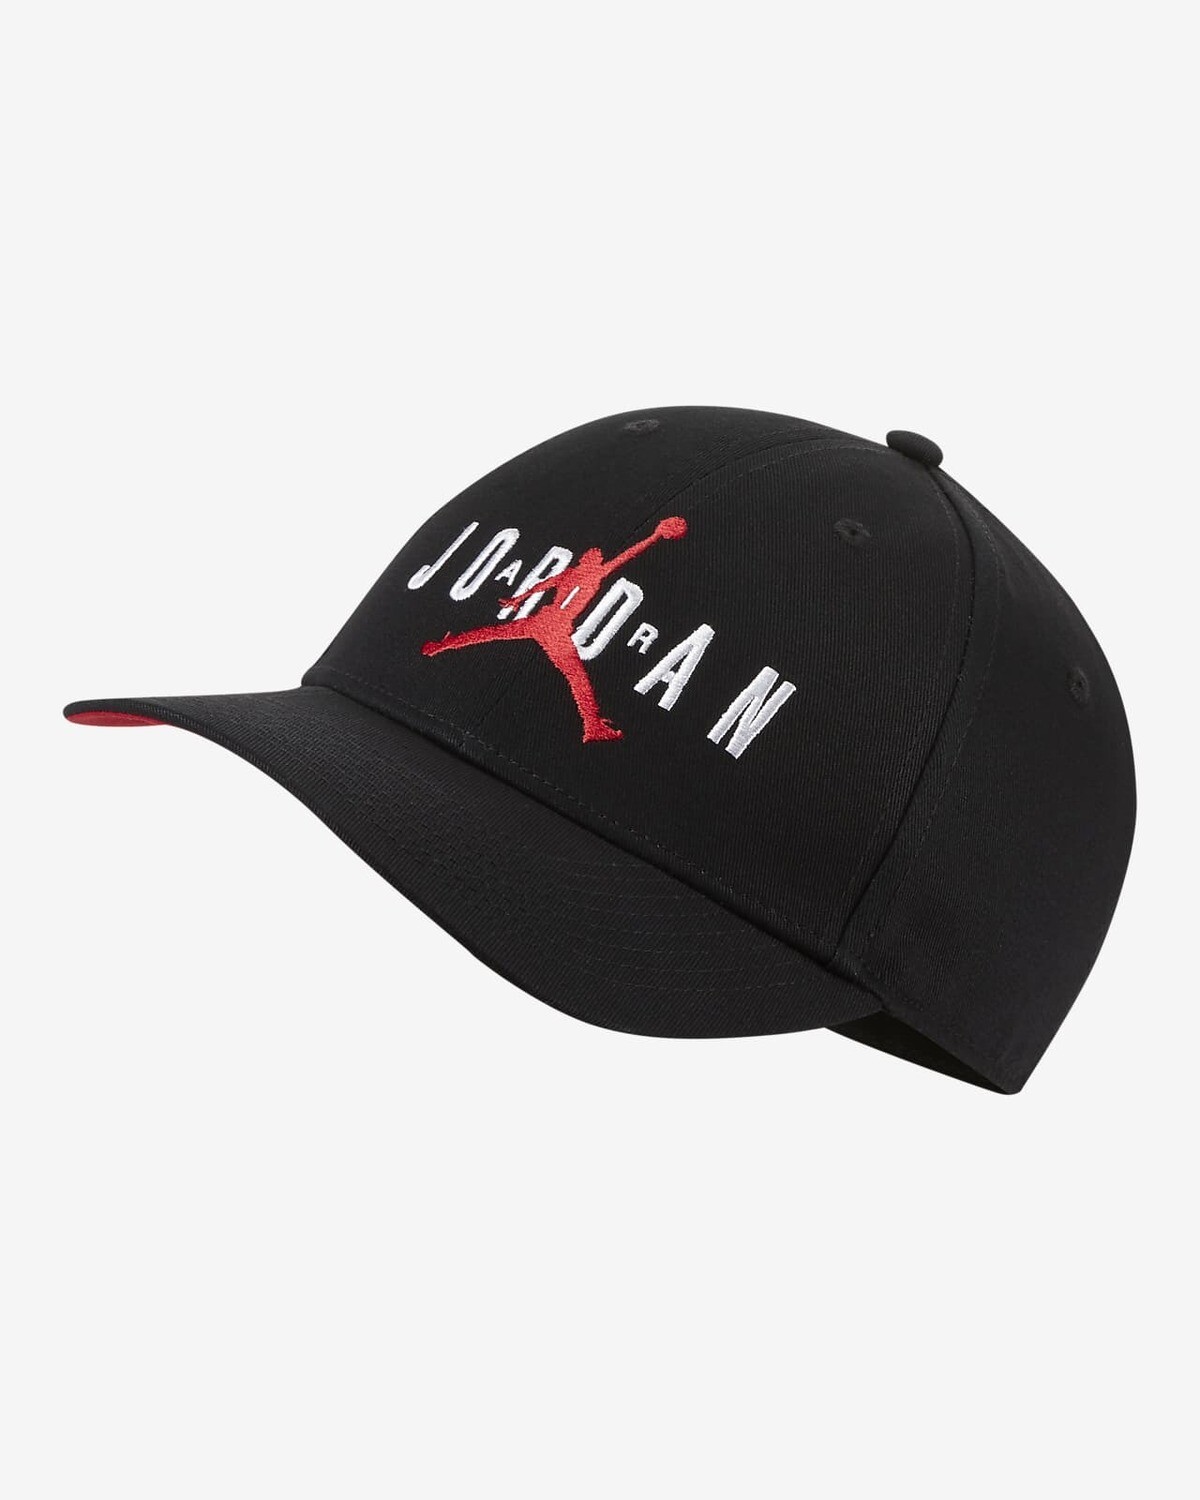 Cappello Jordan Nero 6 pannelli visiera curva Baseball SixPanel Logo  Jumpman Legacy91 Air Cotone art. CK1248 010